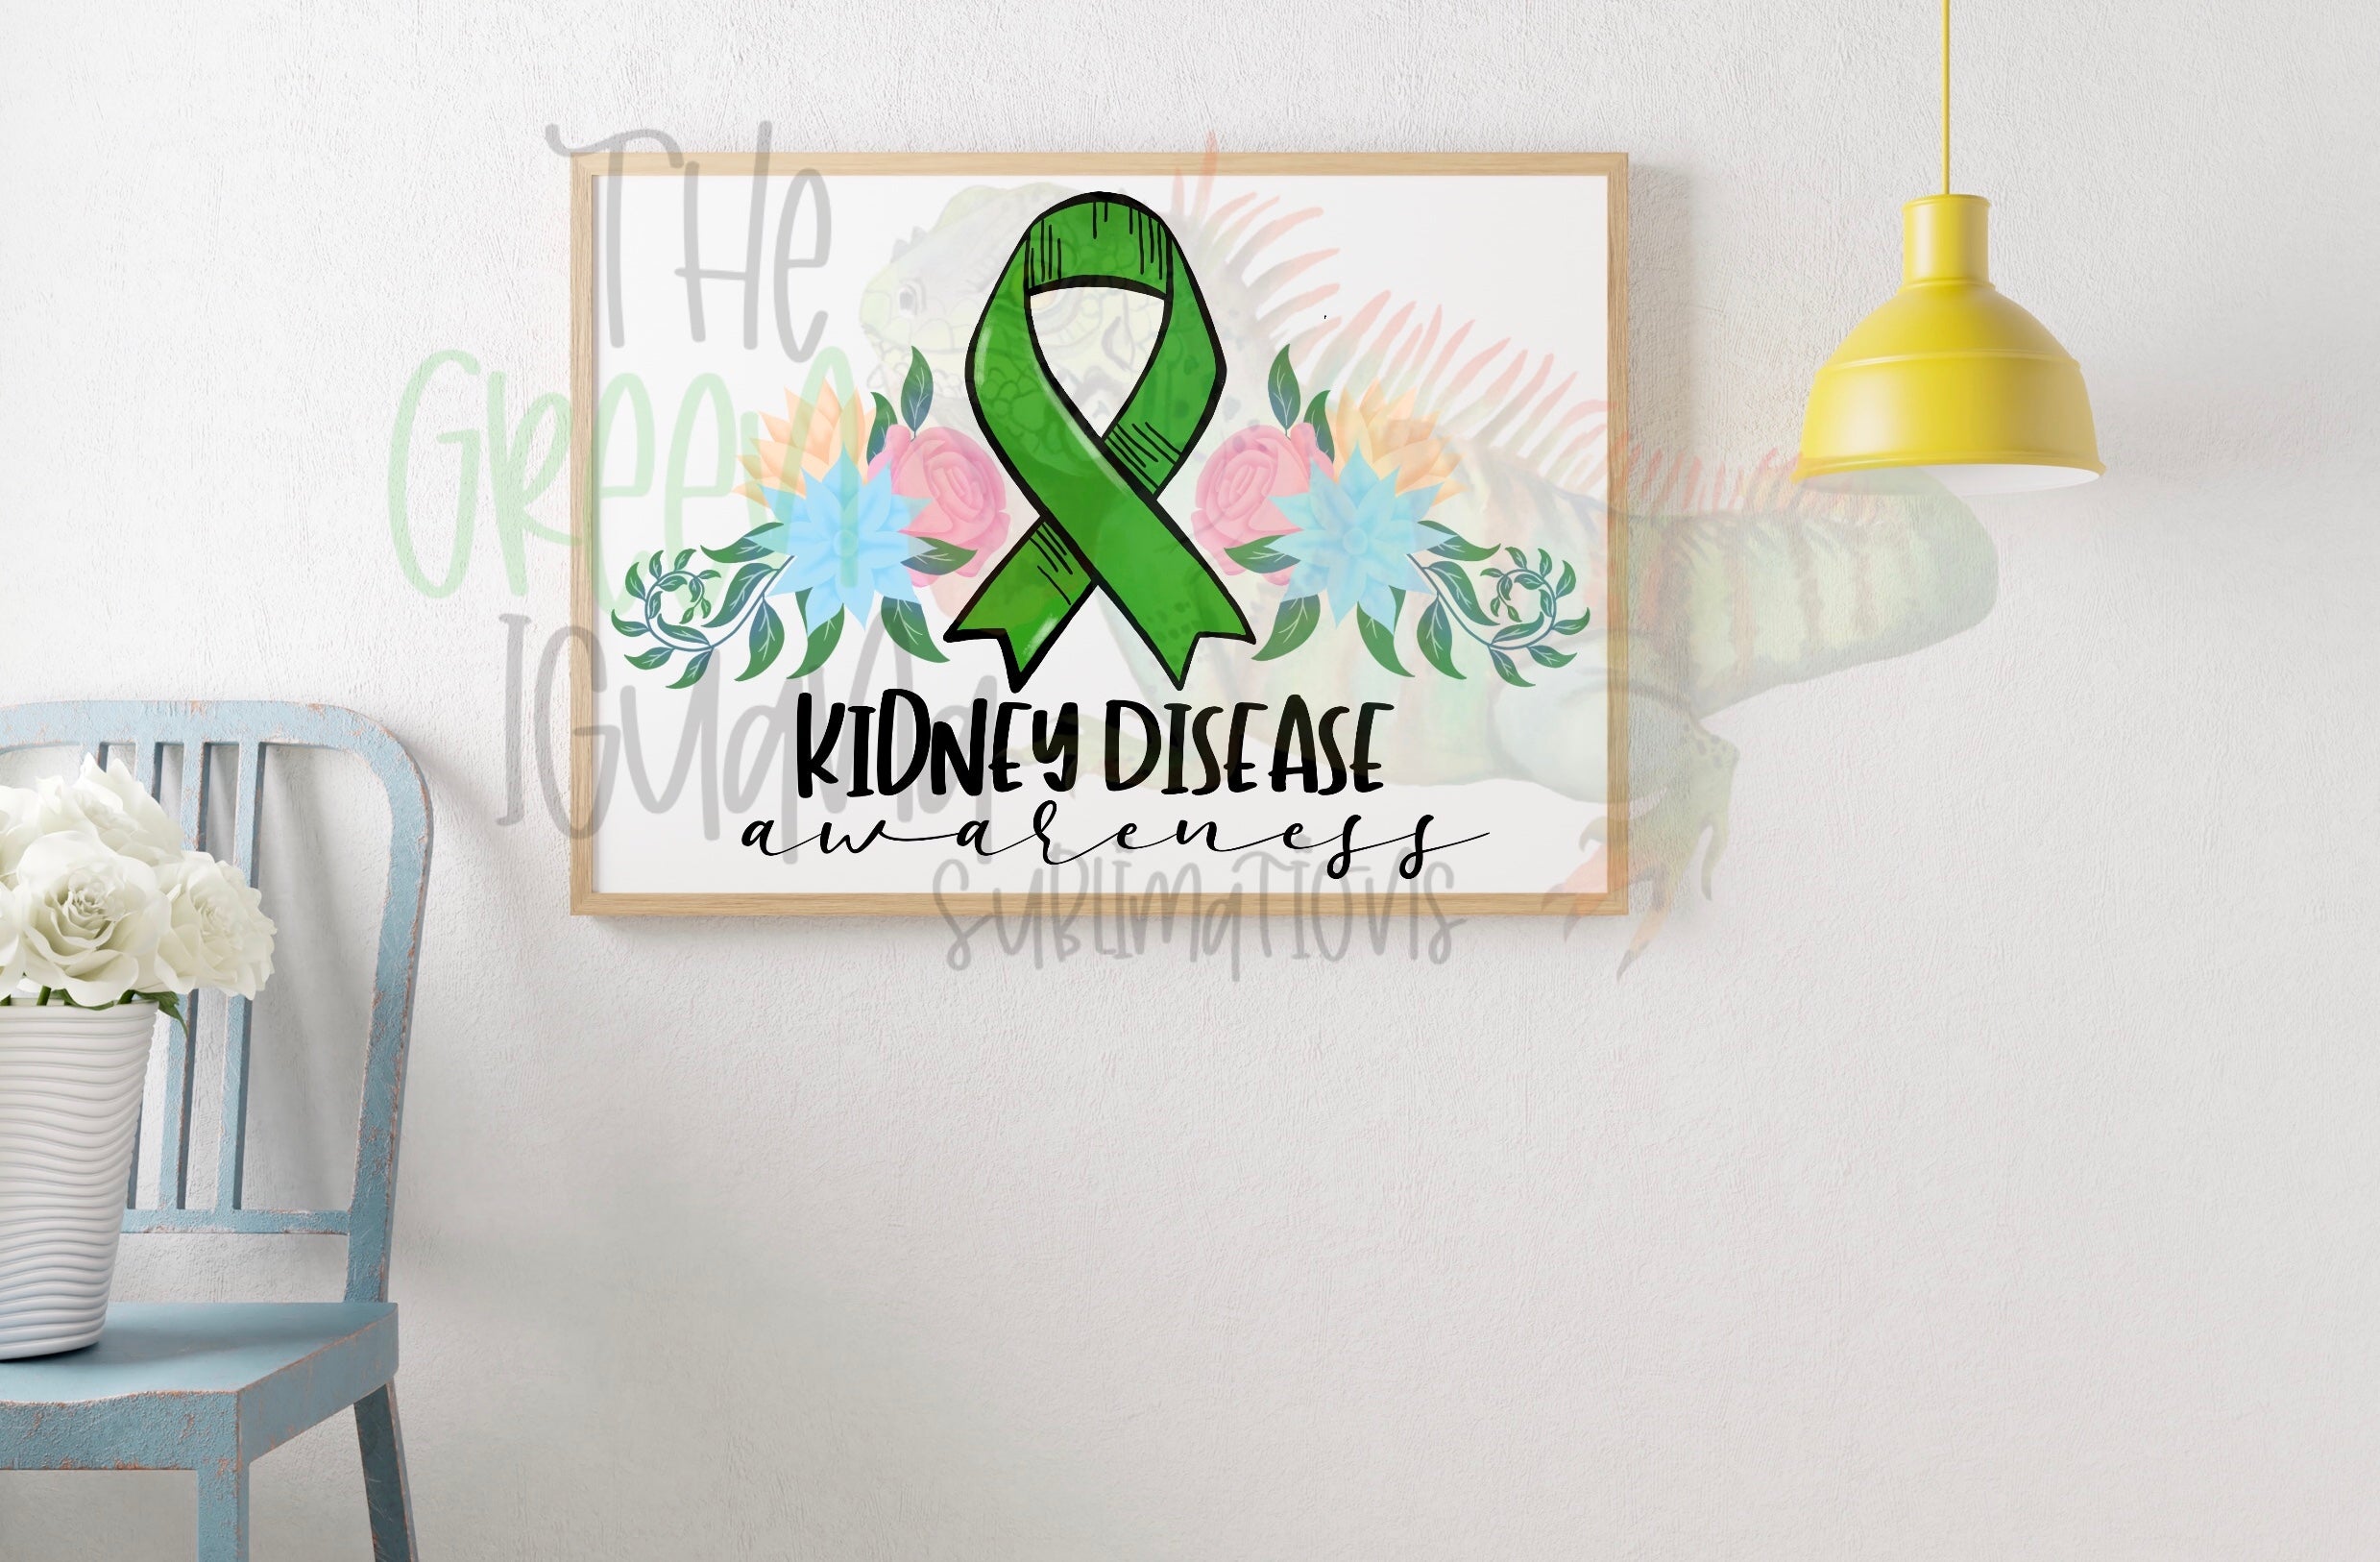 Kidney Disease awareness